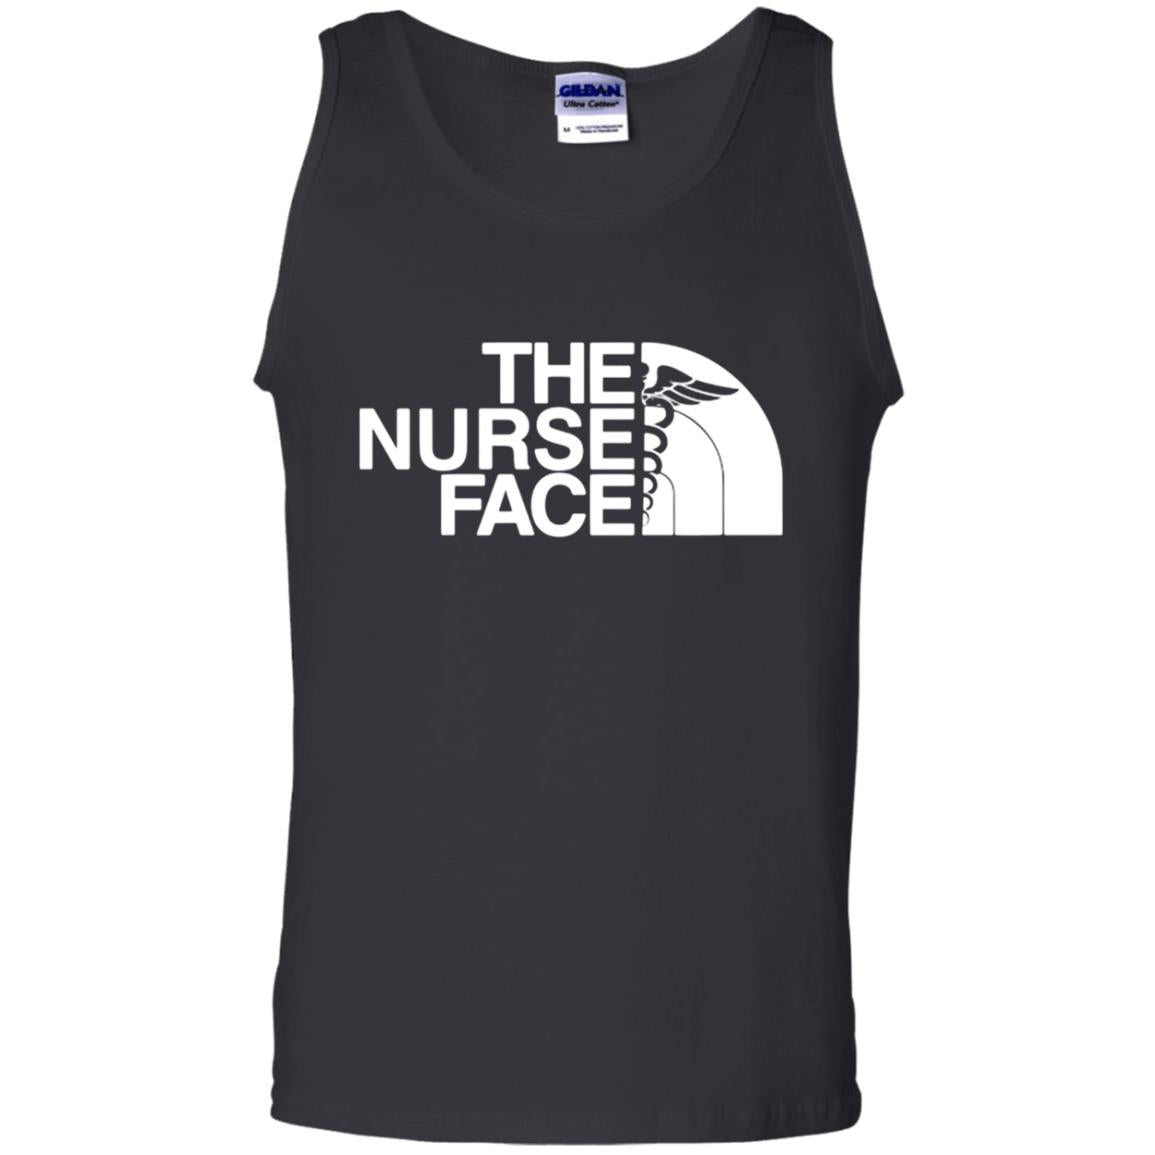 The North Face Mashup The Nurse Face Tank Top Shirts